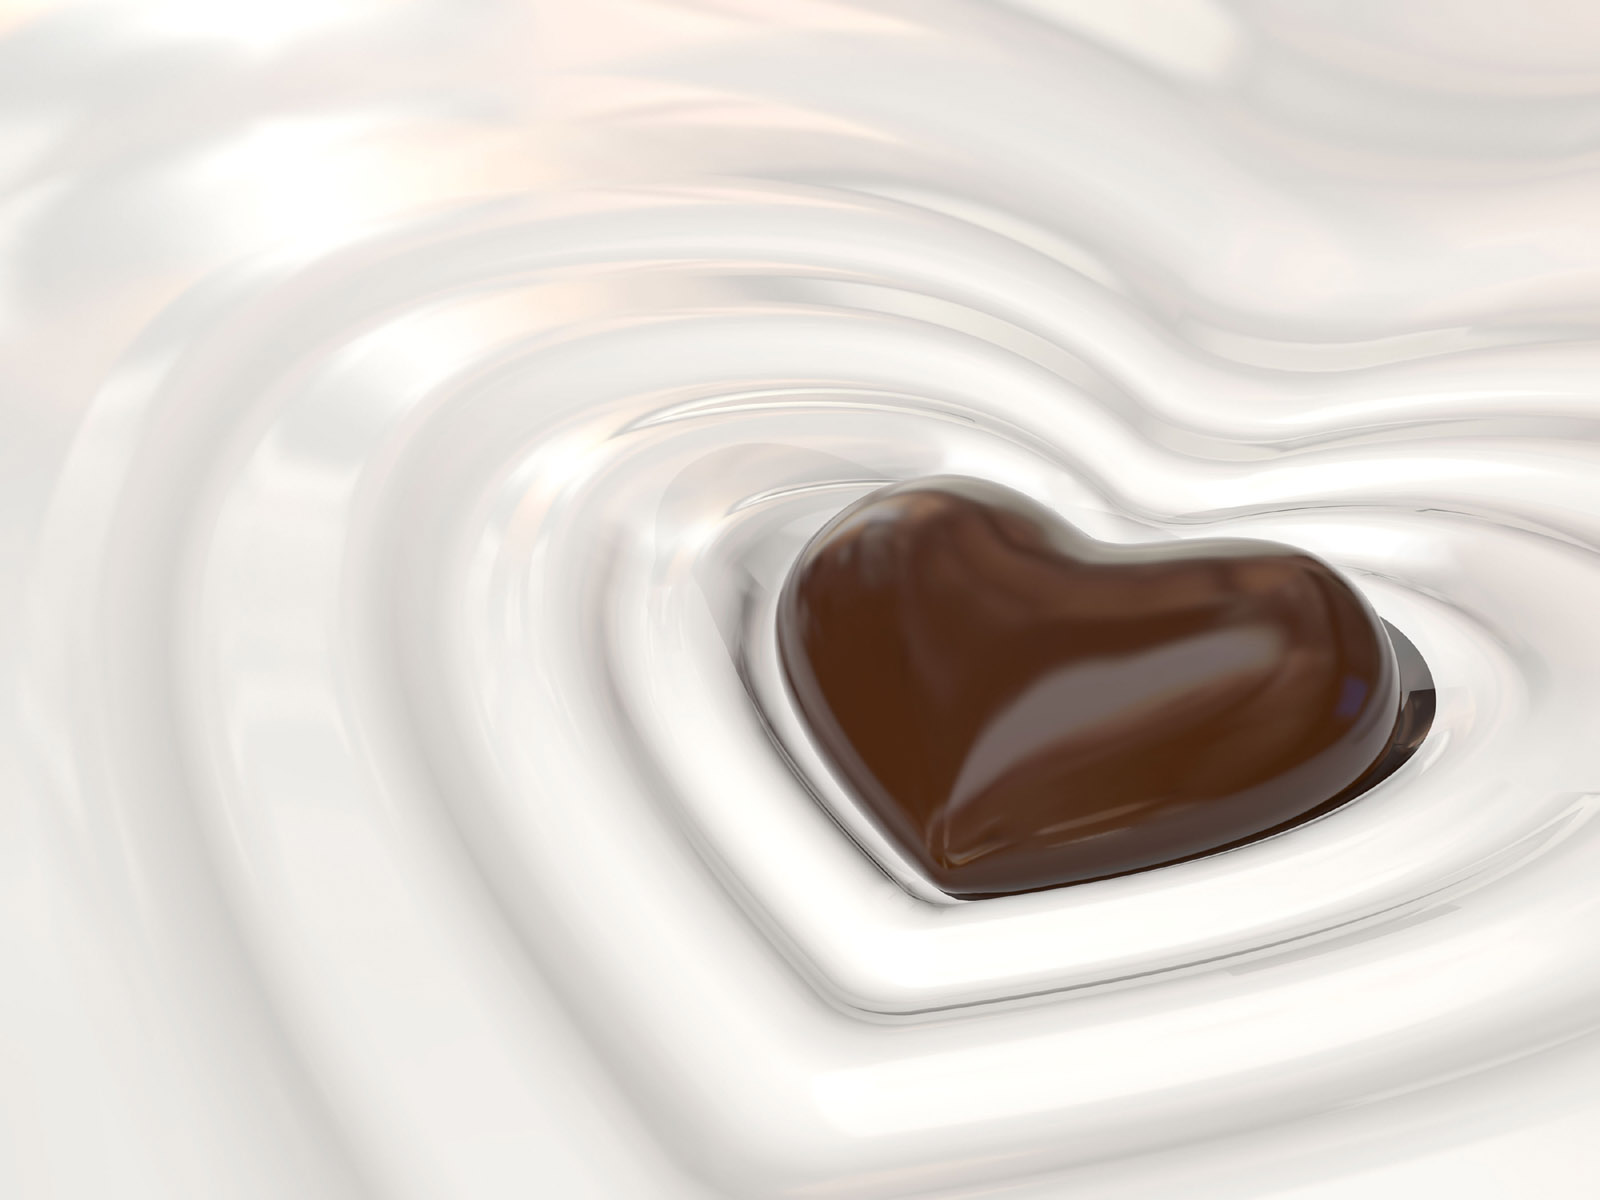 Chocolate Milk Hd - Milk Chocolate Images In Hd - 1600x1200 Wallpaper -  